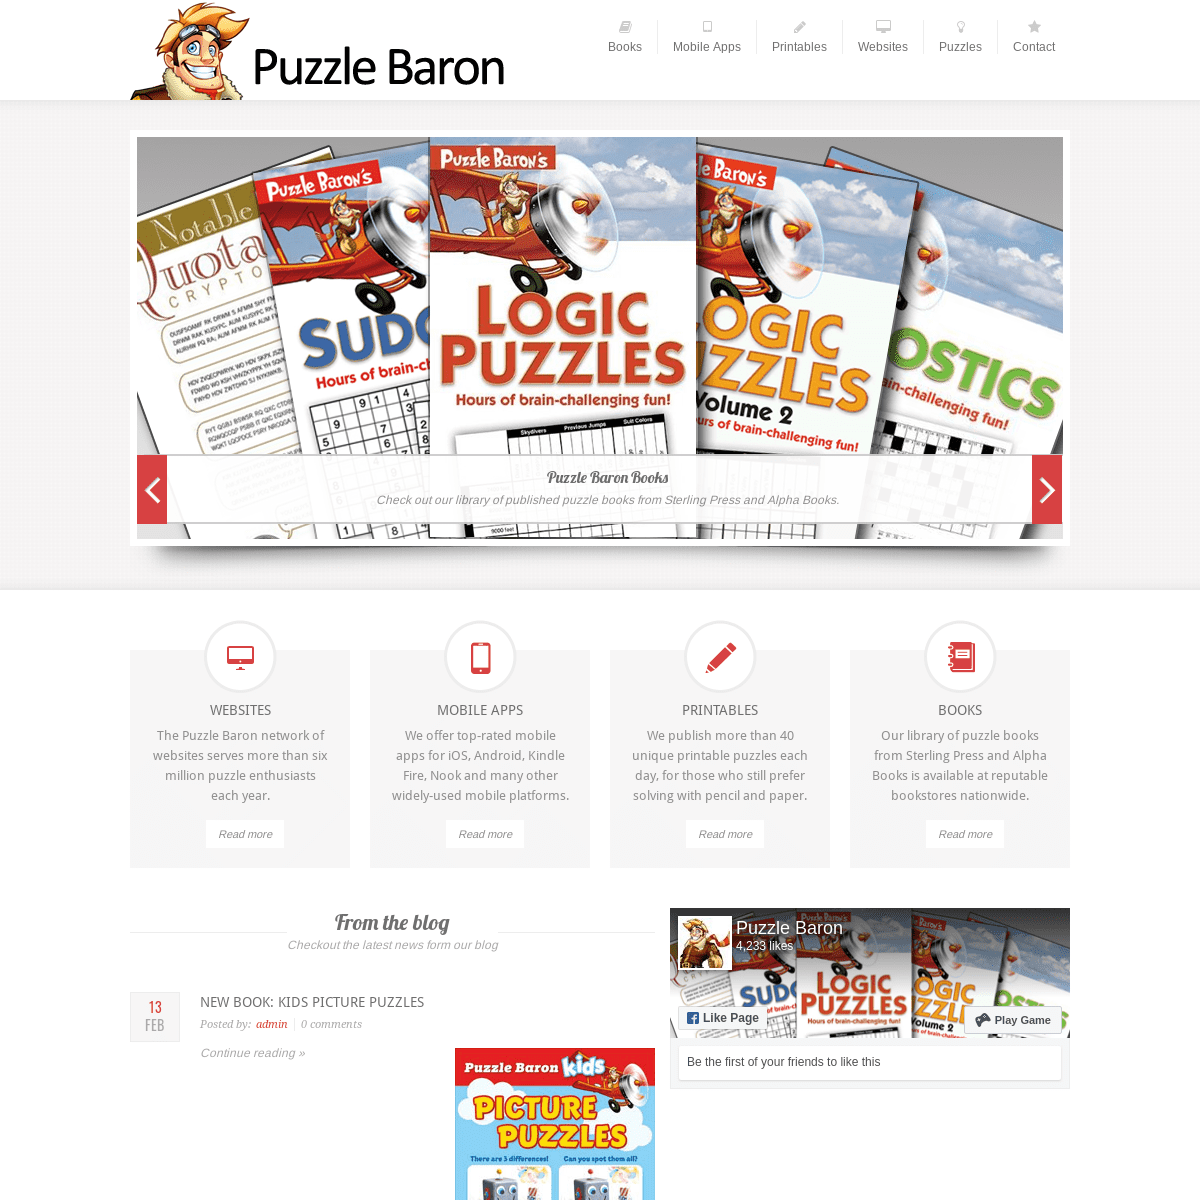 A complete backup of puzzlebaron.com